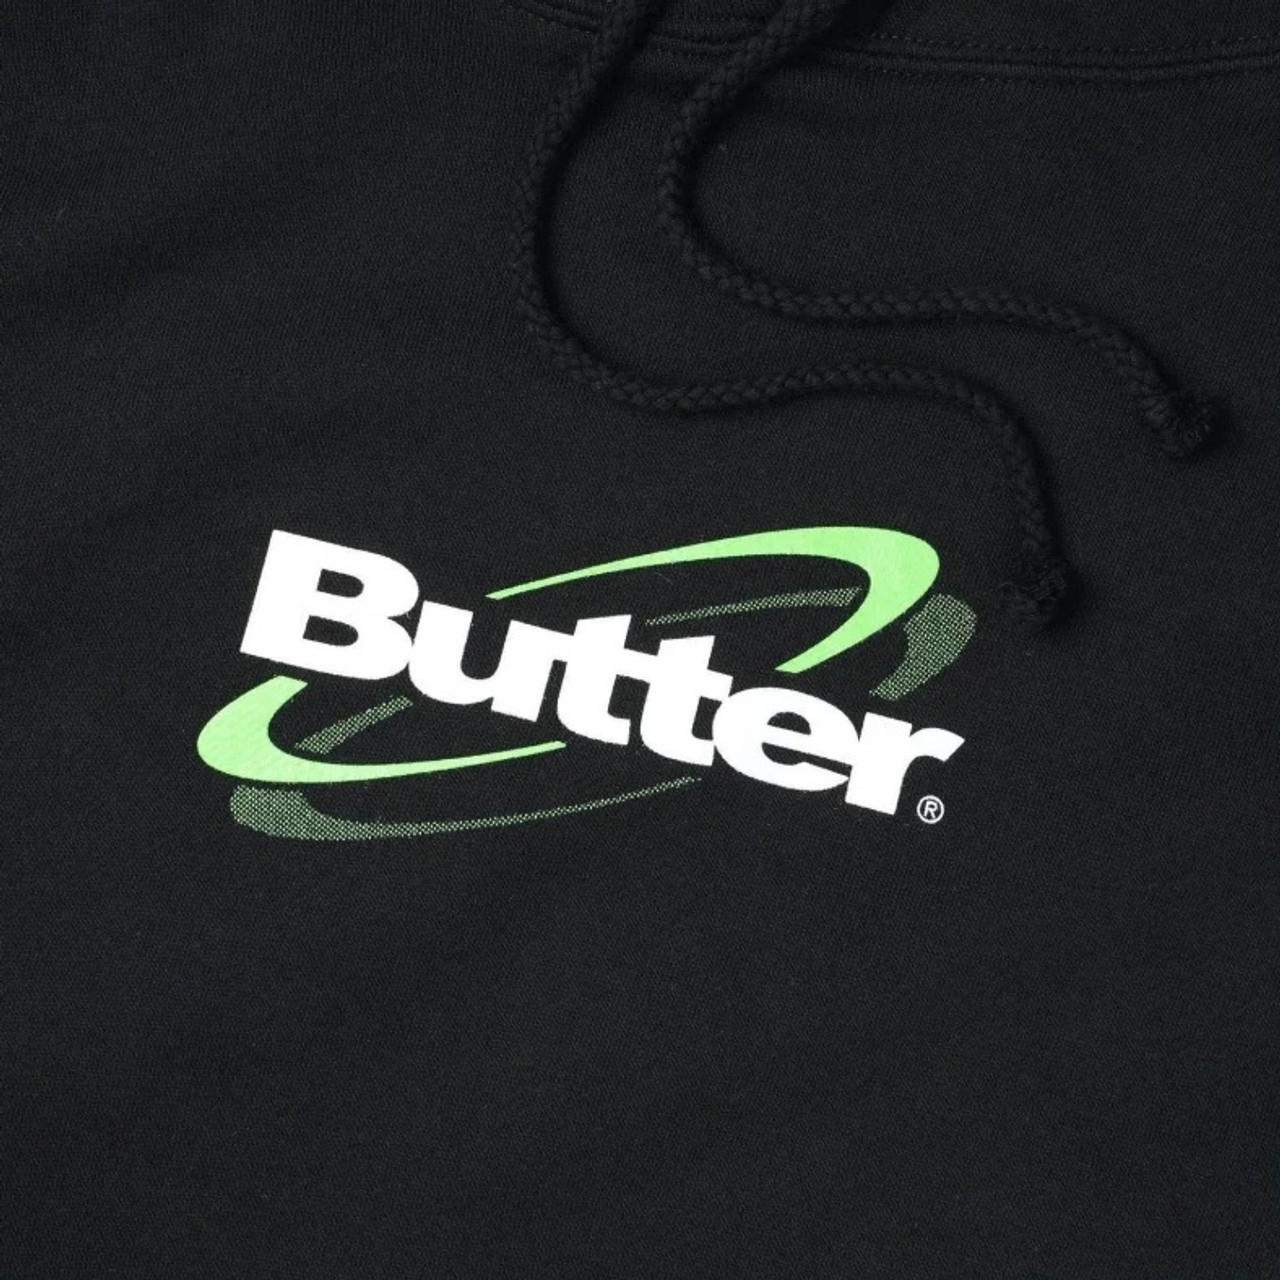 Butter Technology Logo Pullover Black